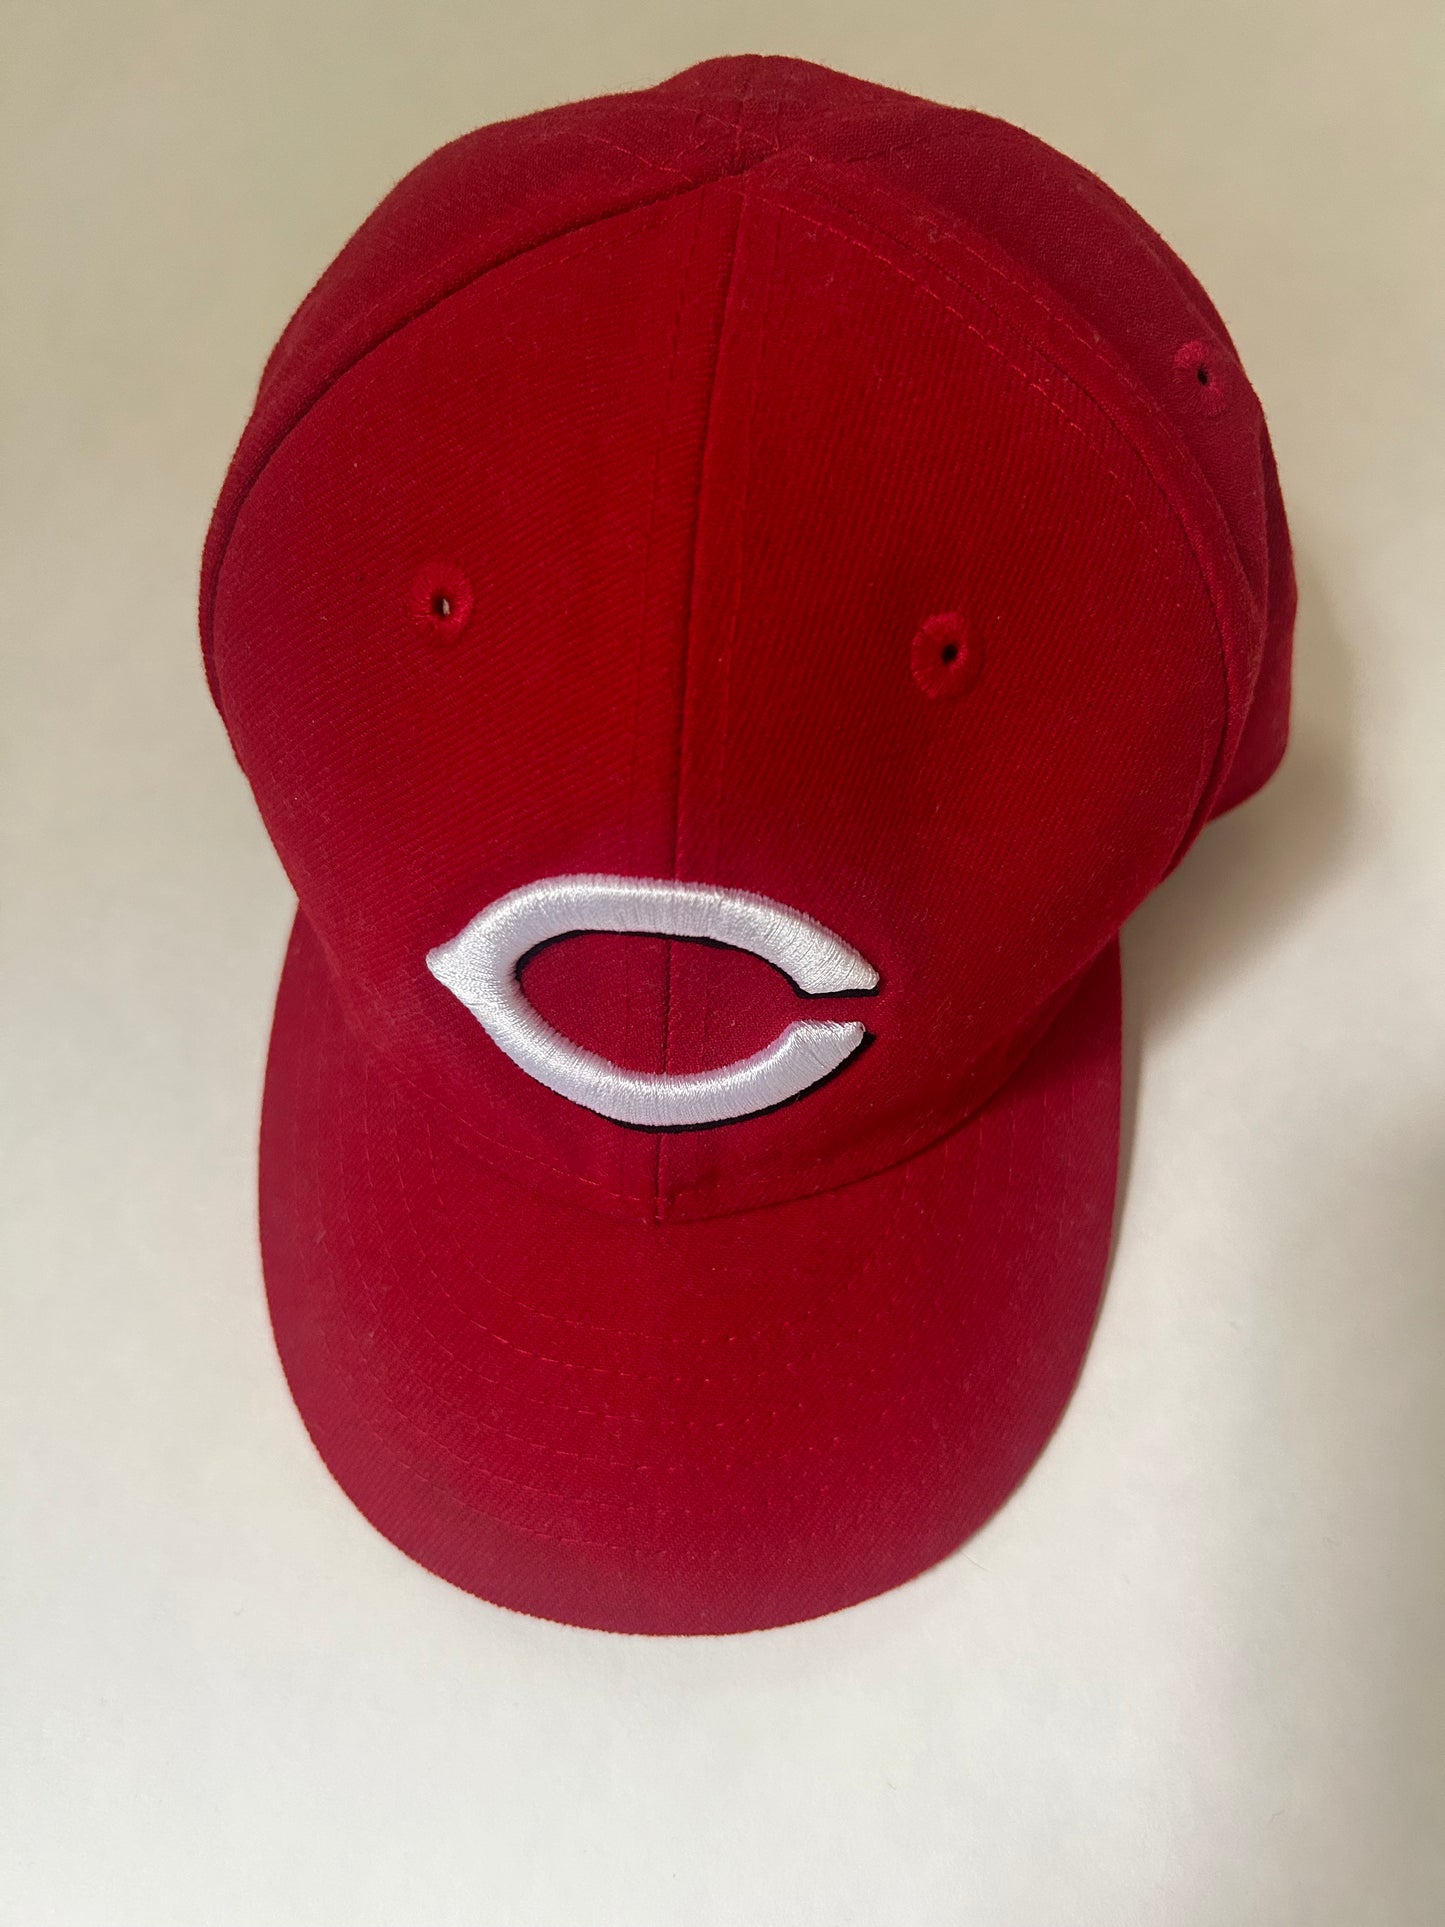 Infant size 6 (48.3cm) Cincinnati Reds baseball hat